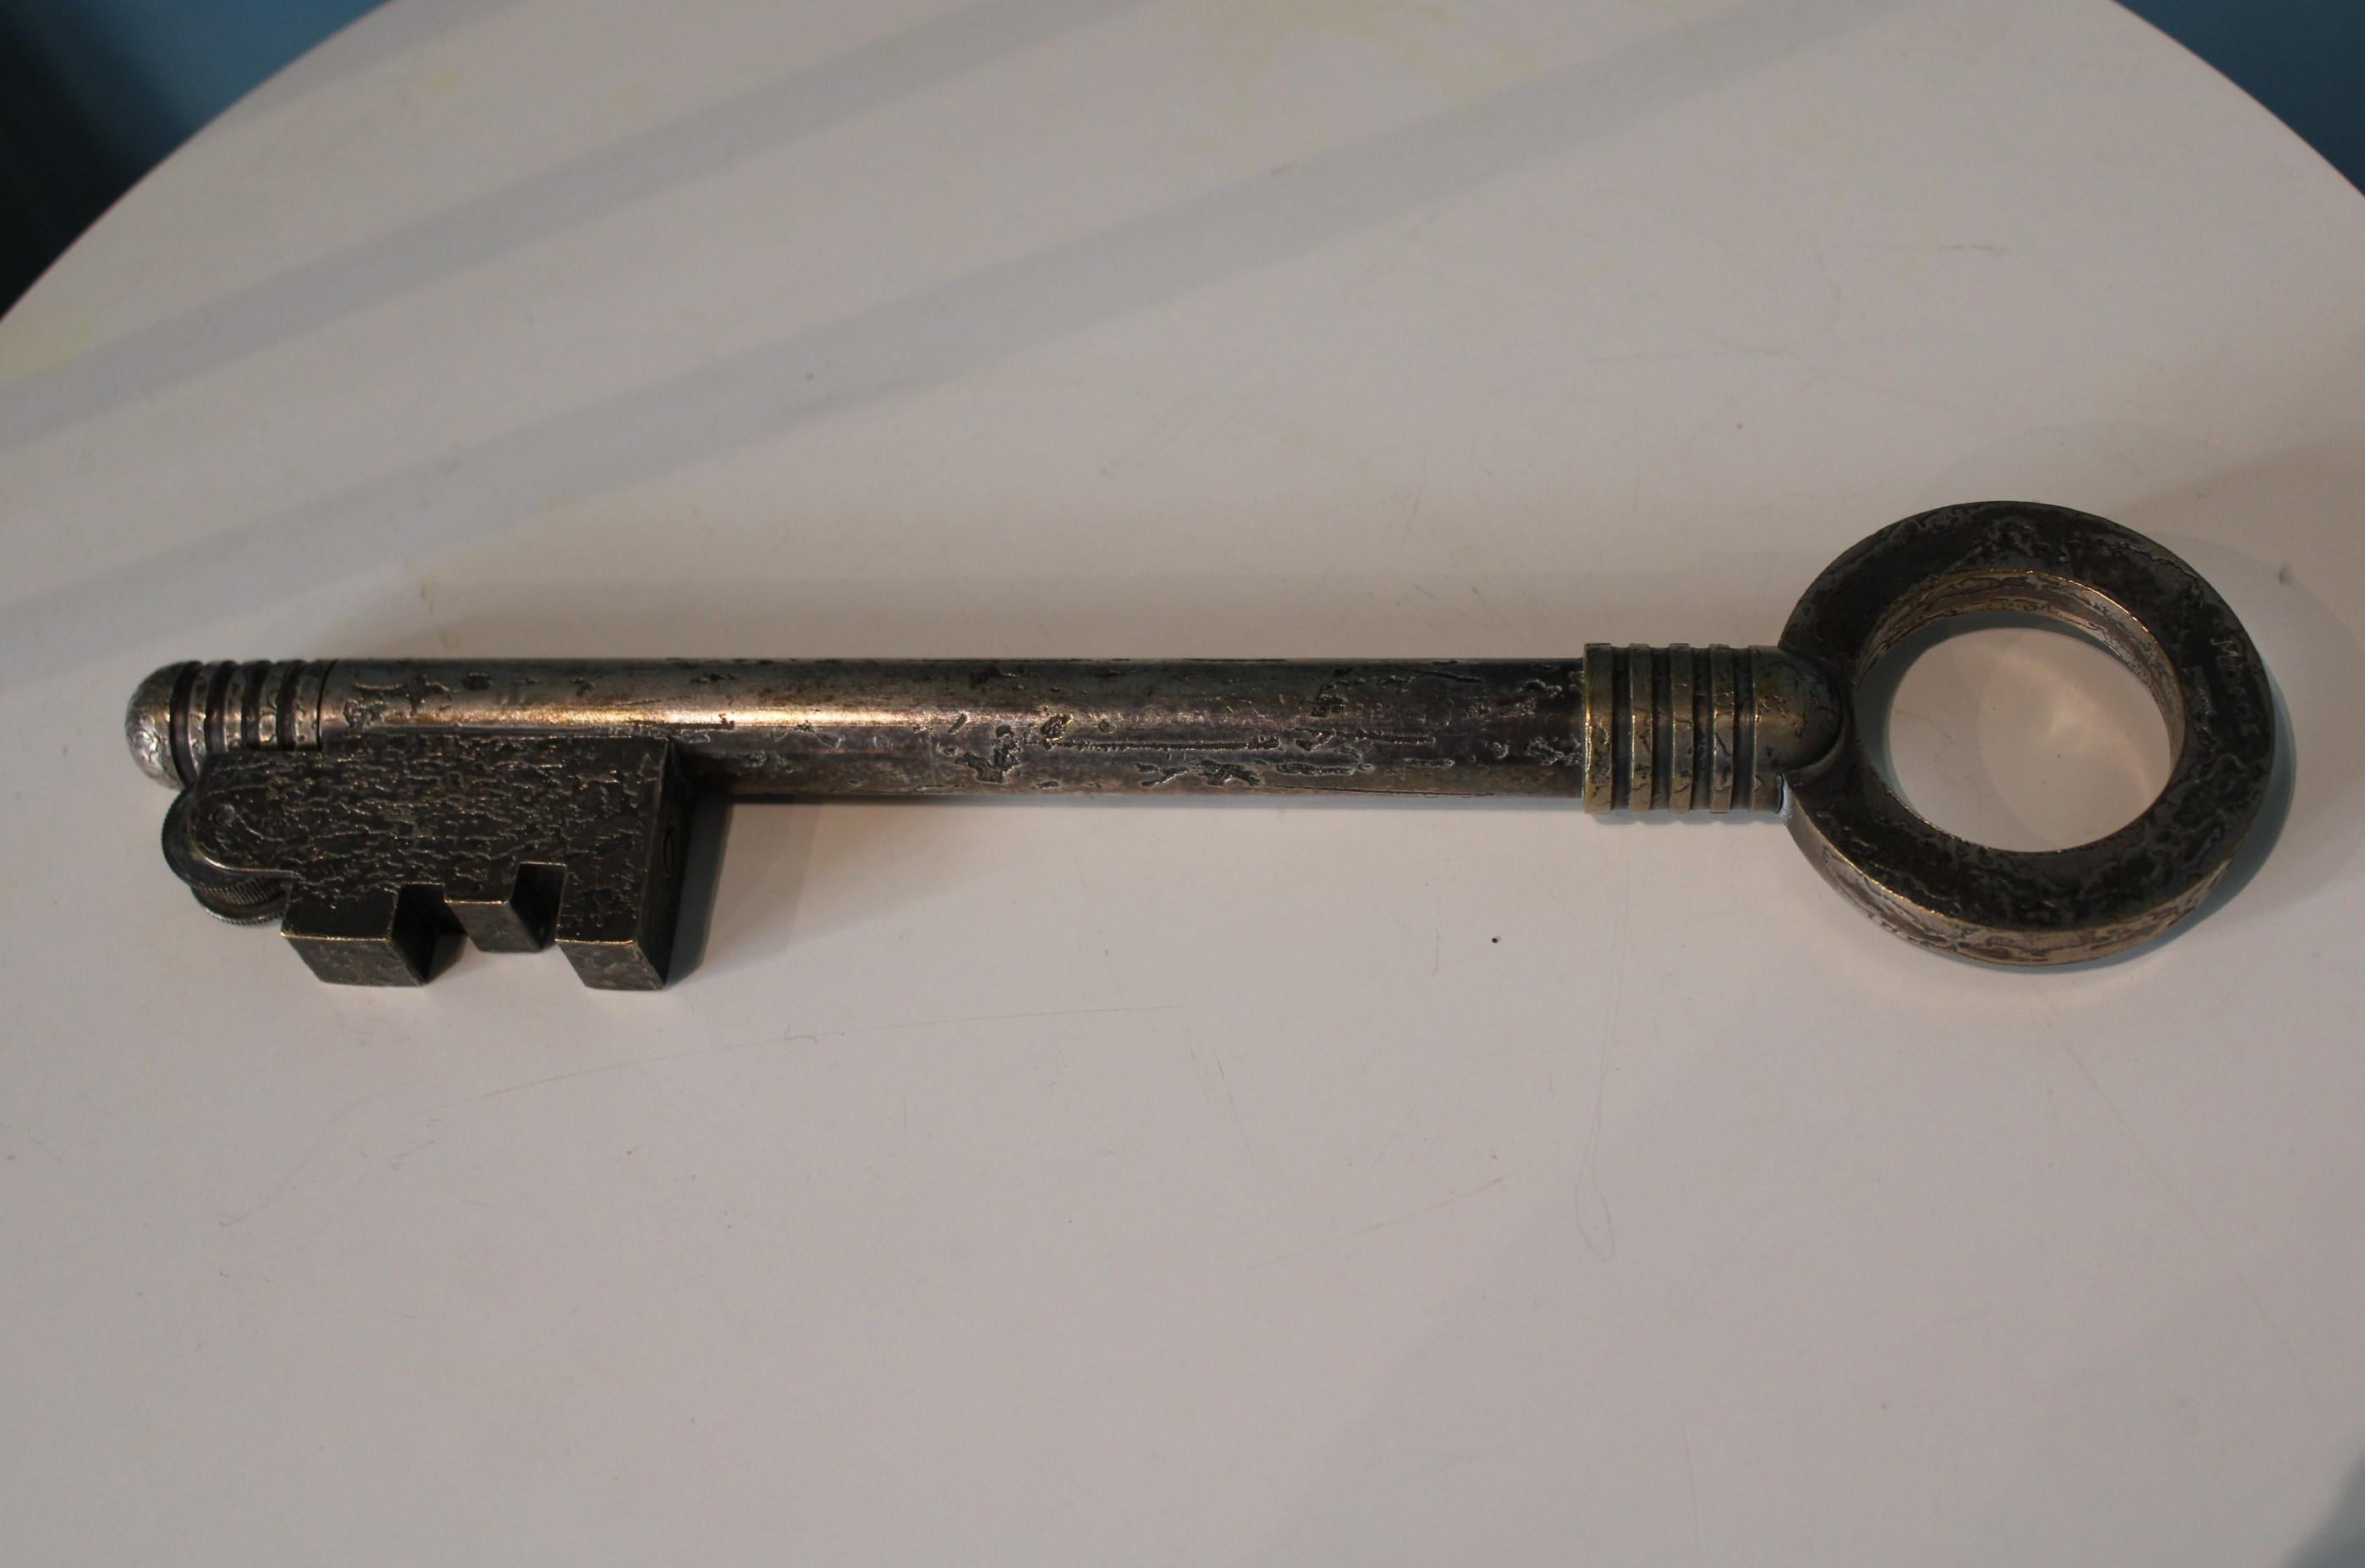 Large lighter key
Circa 1970
Nonfunctional.